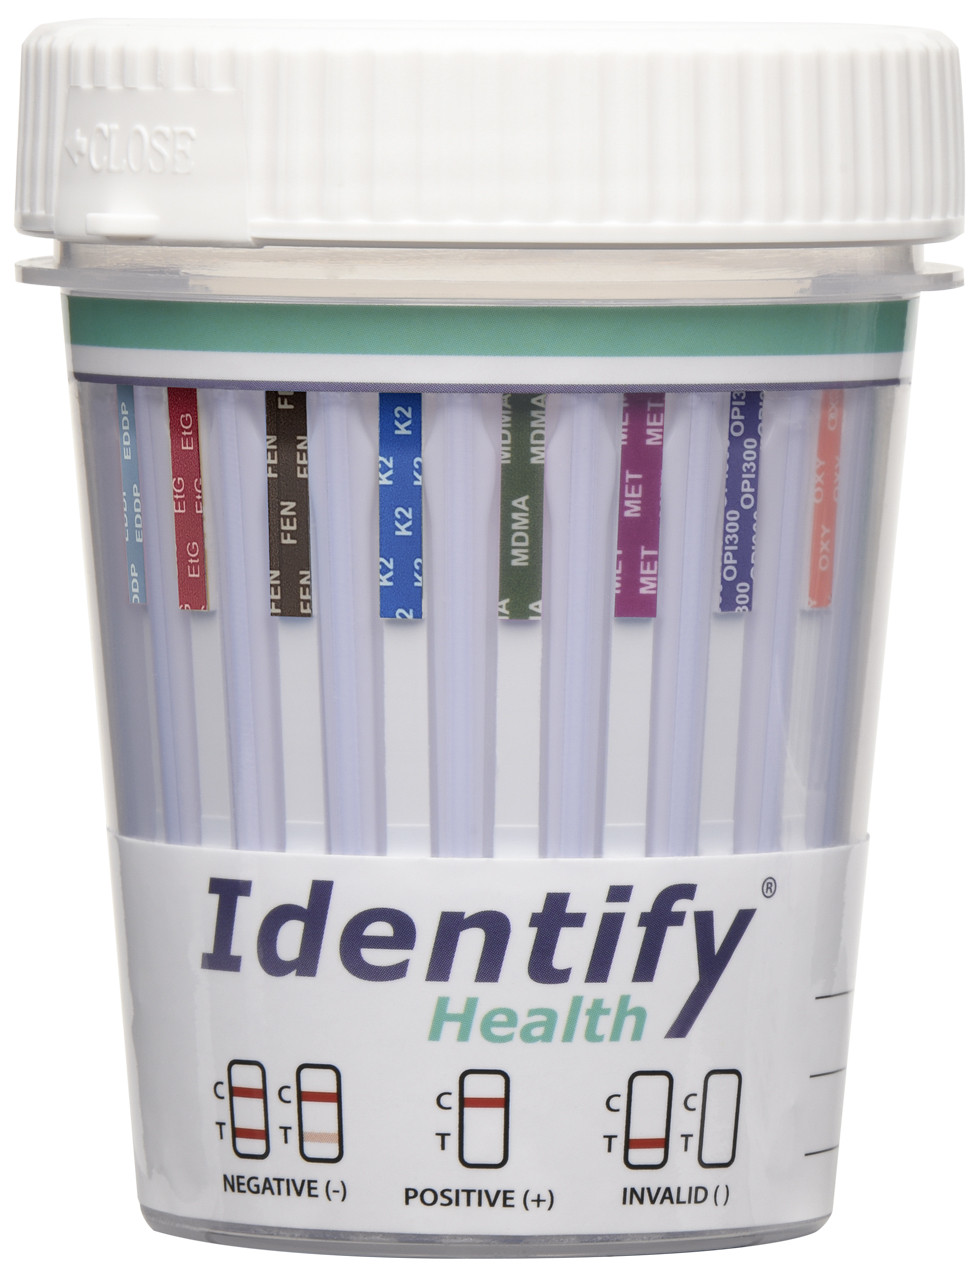 Identify Health 16 Panel Drug Test Cup with FEN Fentanyl, ETG, K2